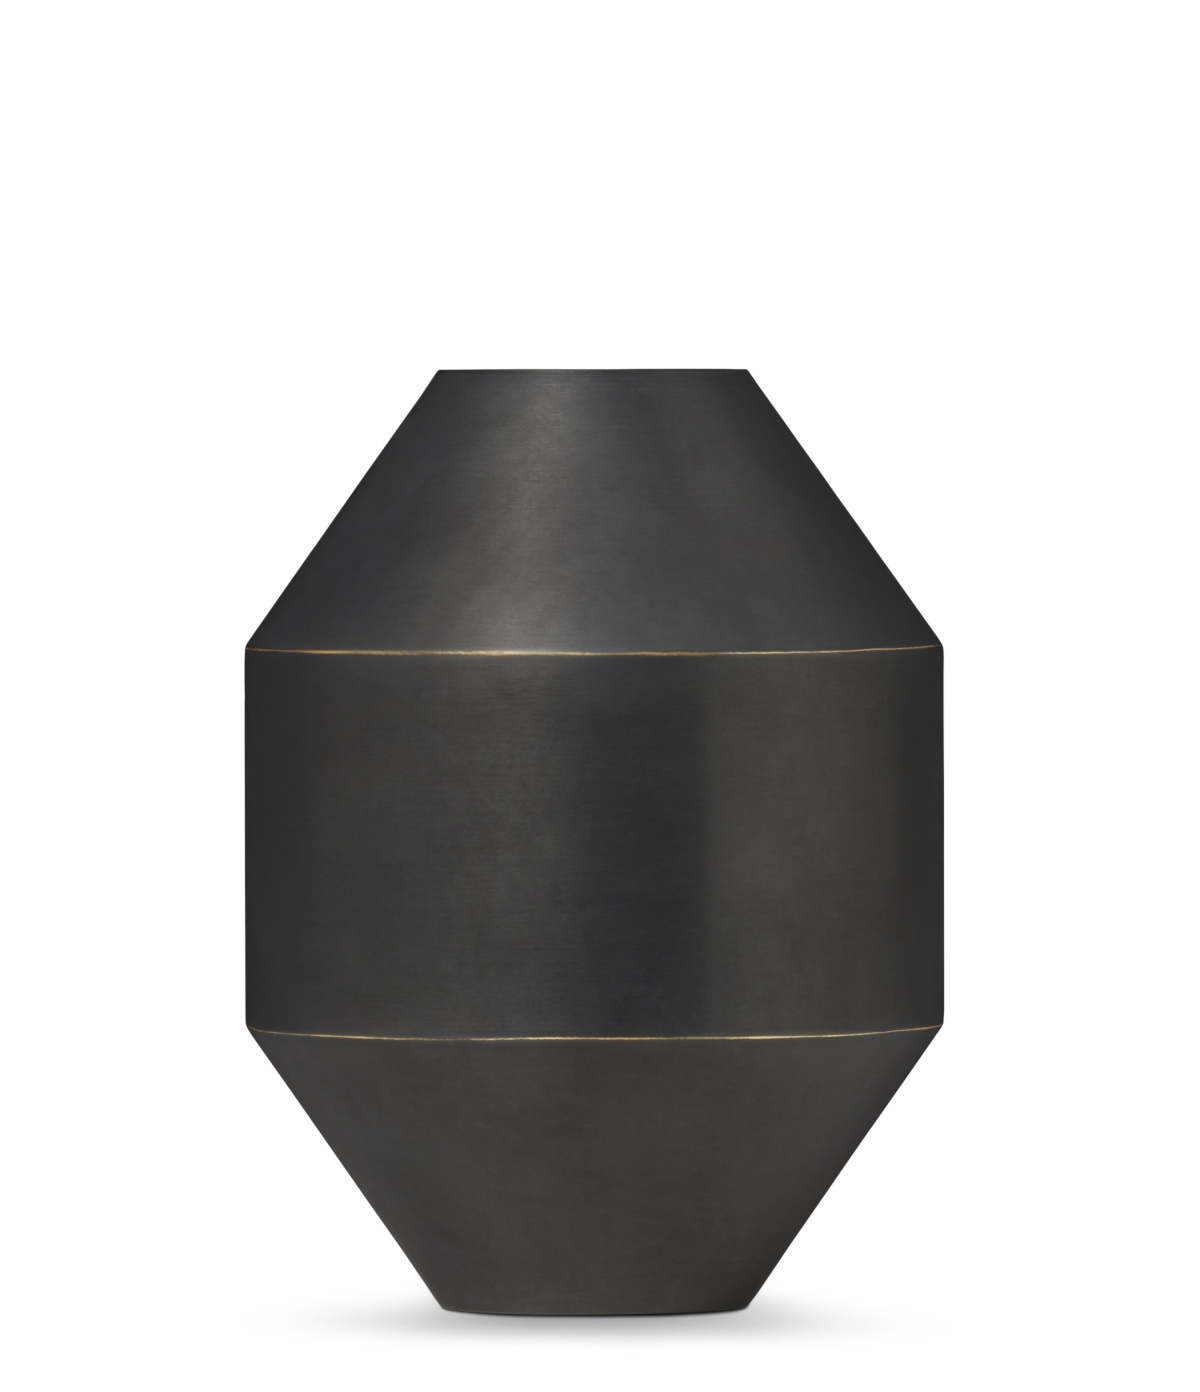 Hydro Vase, H 30 cm, glass